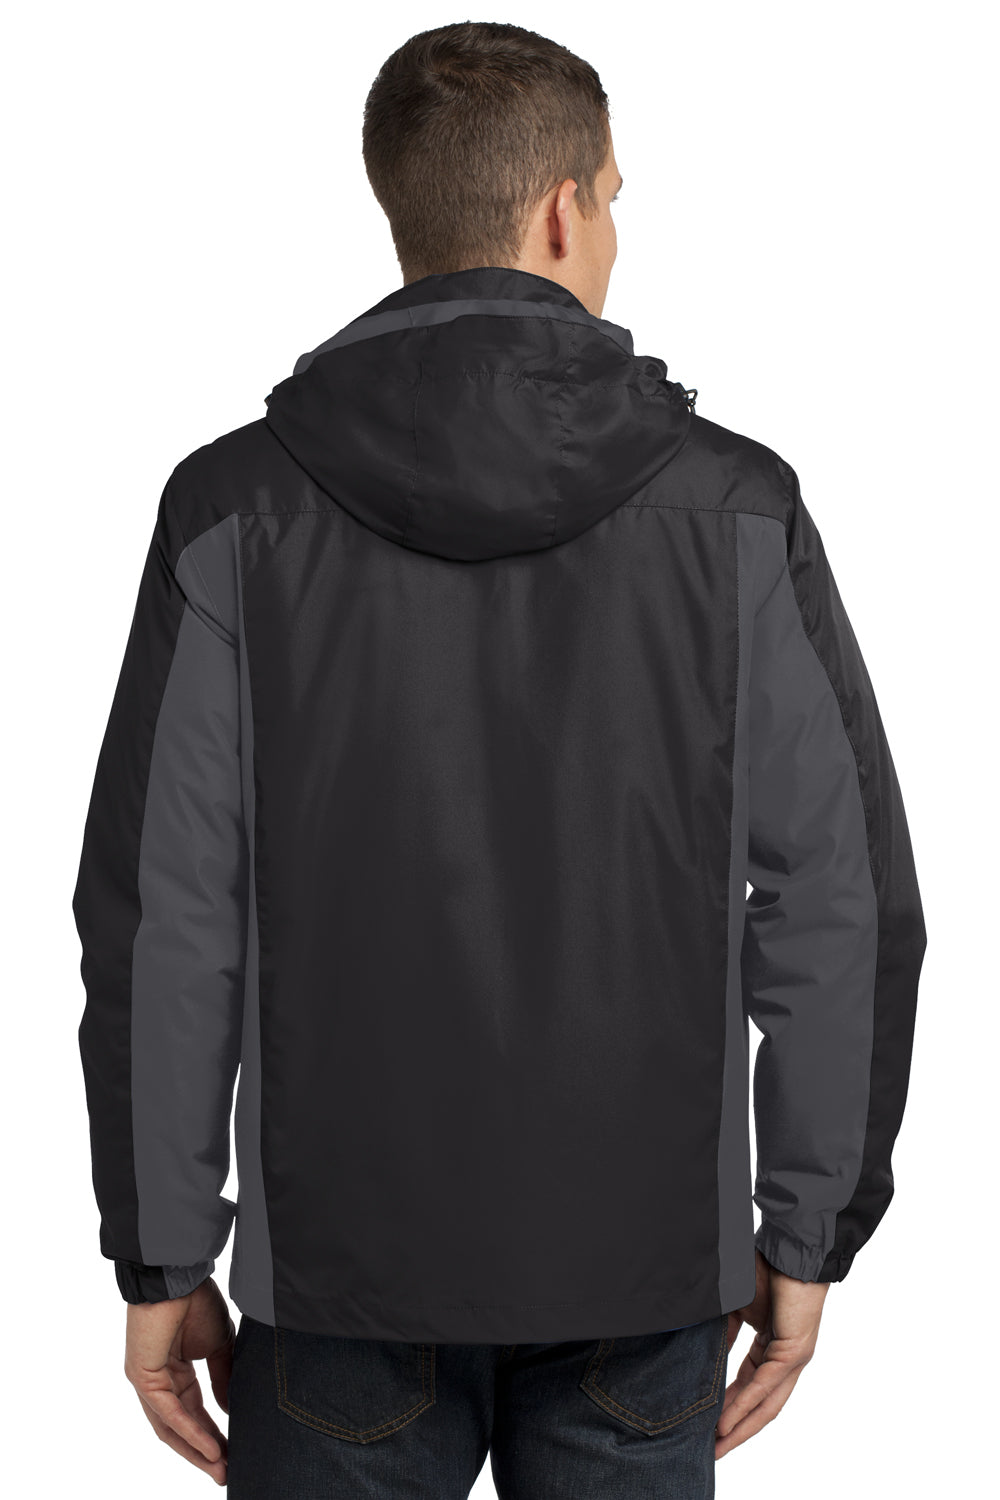 Port Authority J321 Mens 3-in-1 Wind & Water Resistant Full Zip Hooded Jacket Black/Grey/Red Back